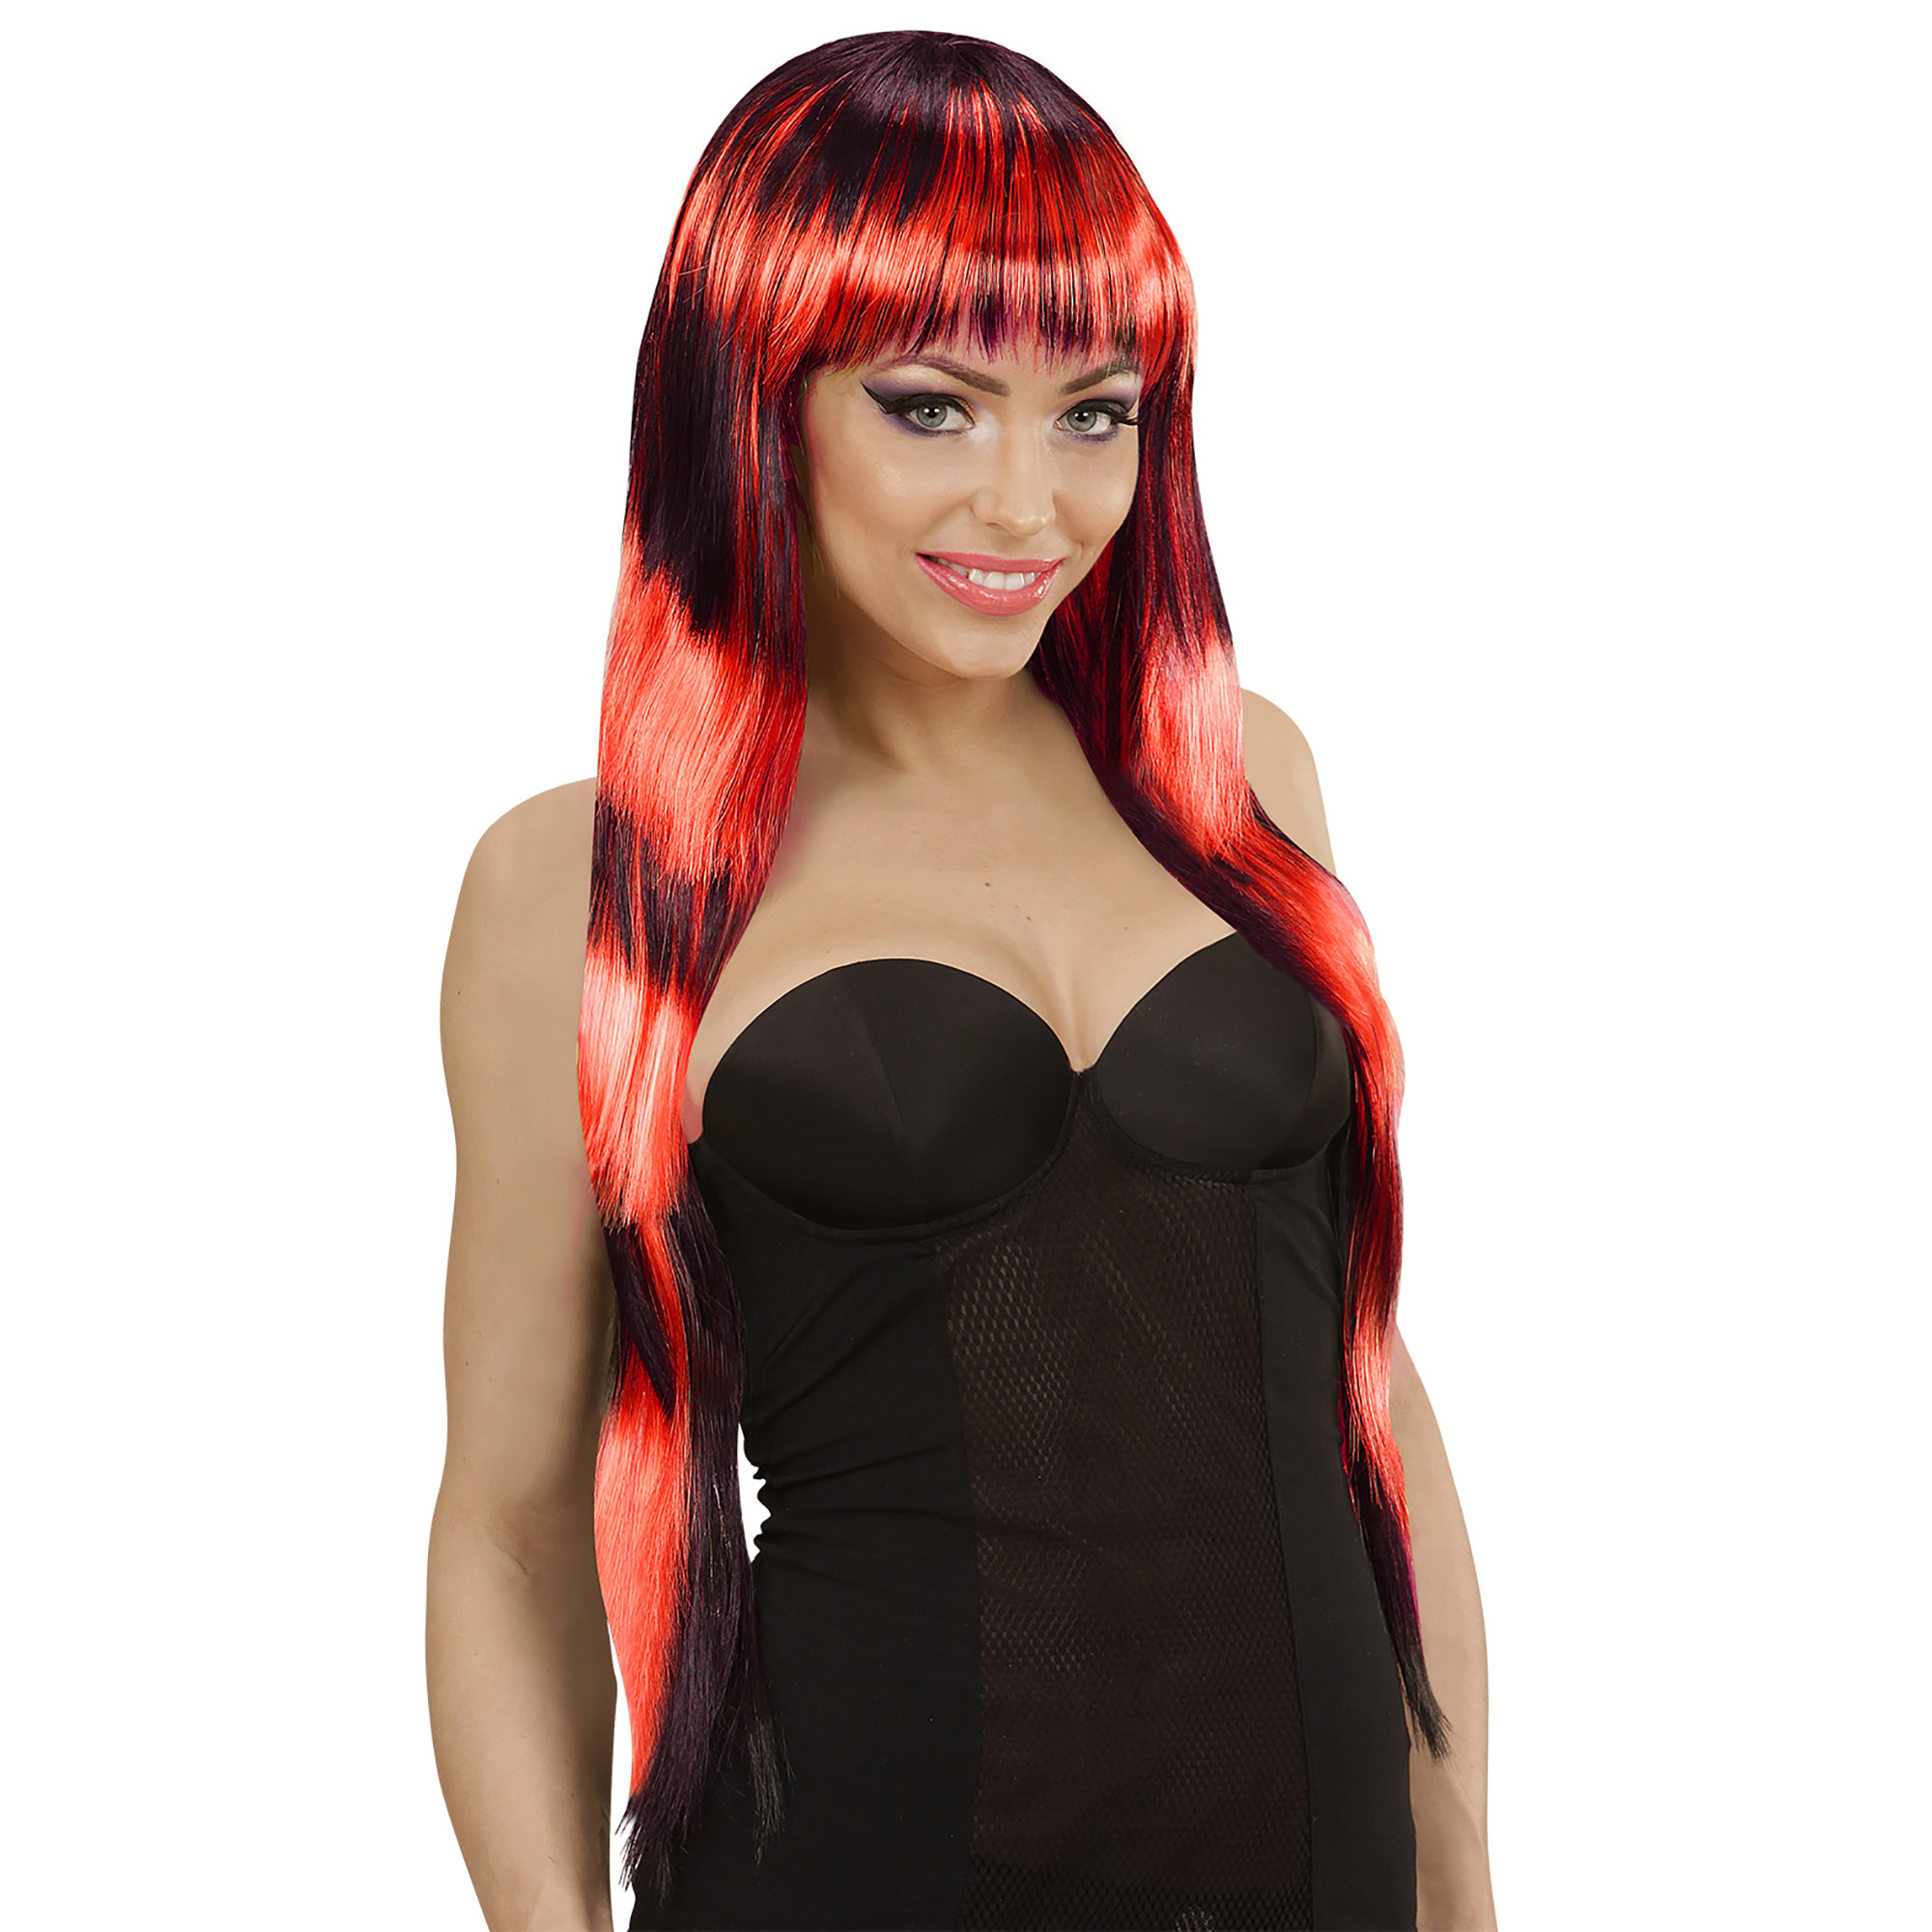 Pruik fashion streaks zwart en rood lang haar